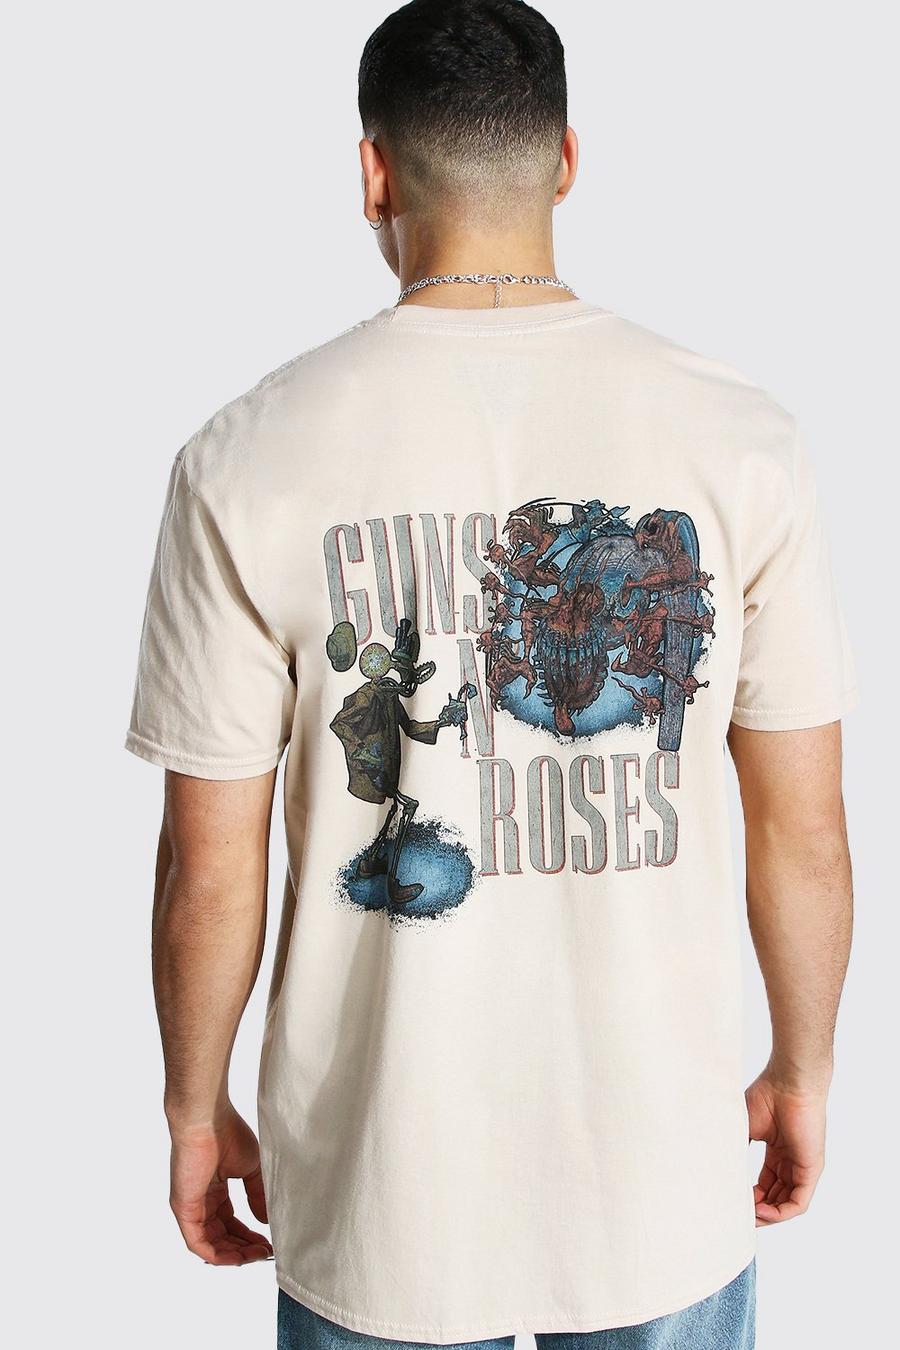 T-shirt oversize officiel Guns N Roses, Sand beige